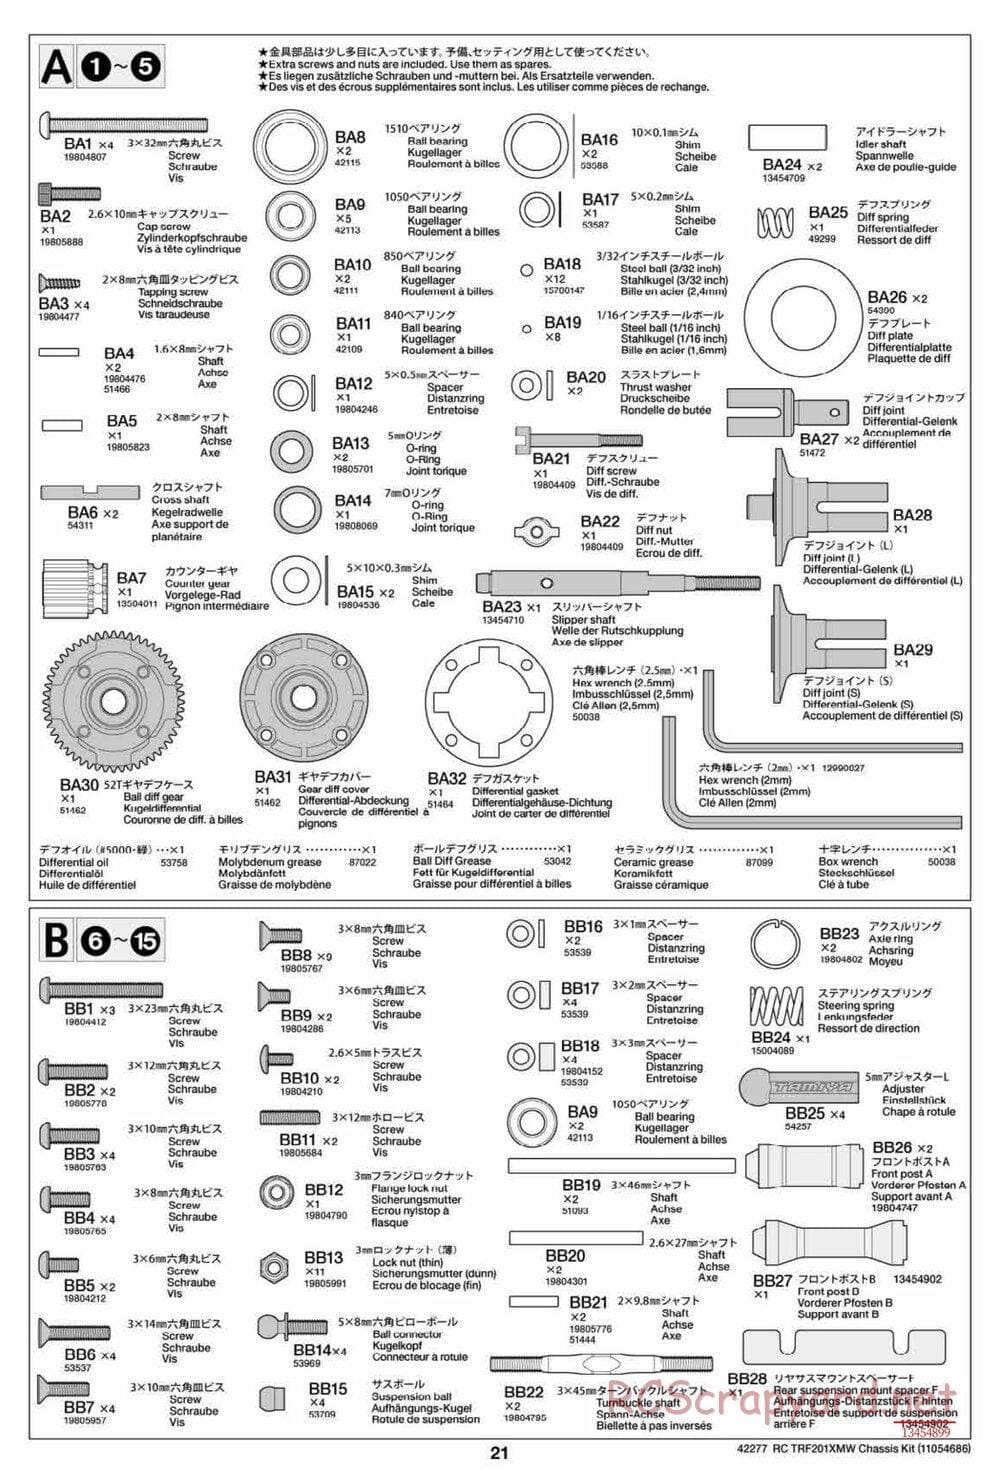 Tamiya - TRF201XMW Chassis - Manual - Page 21